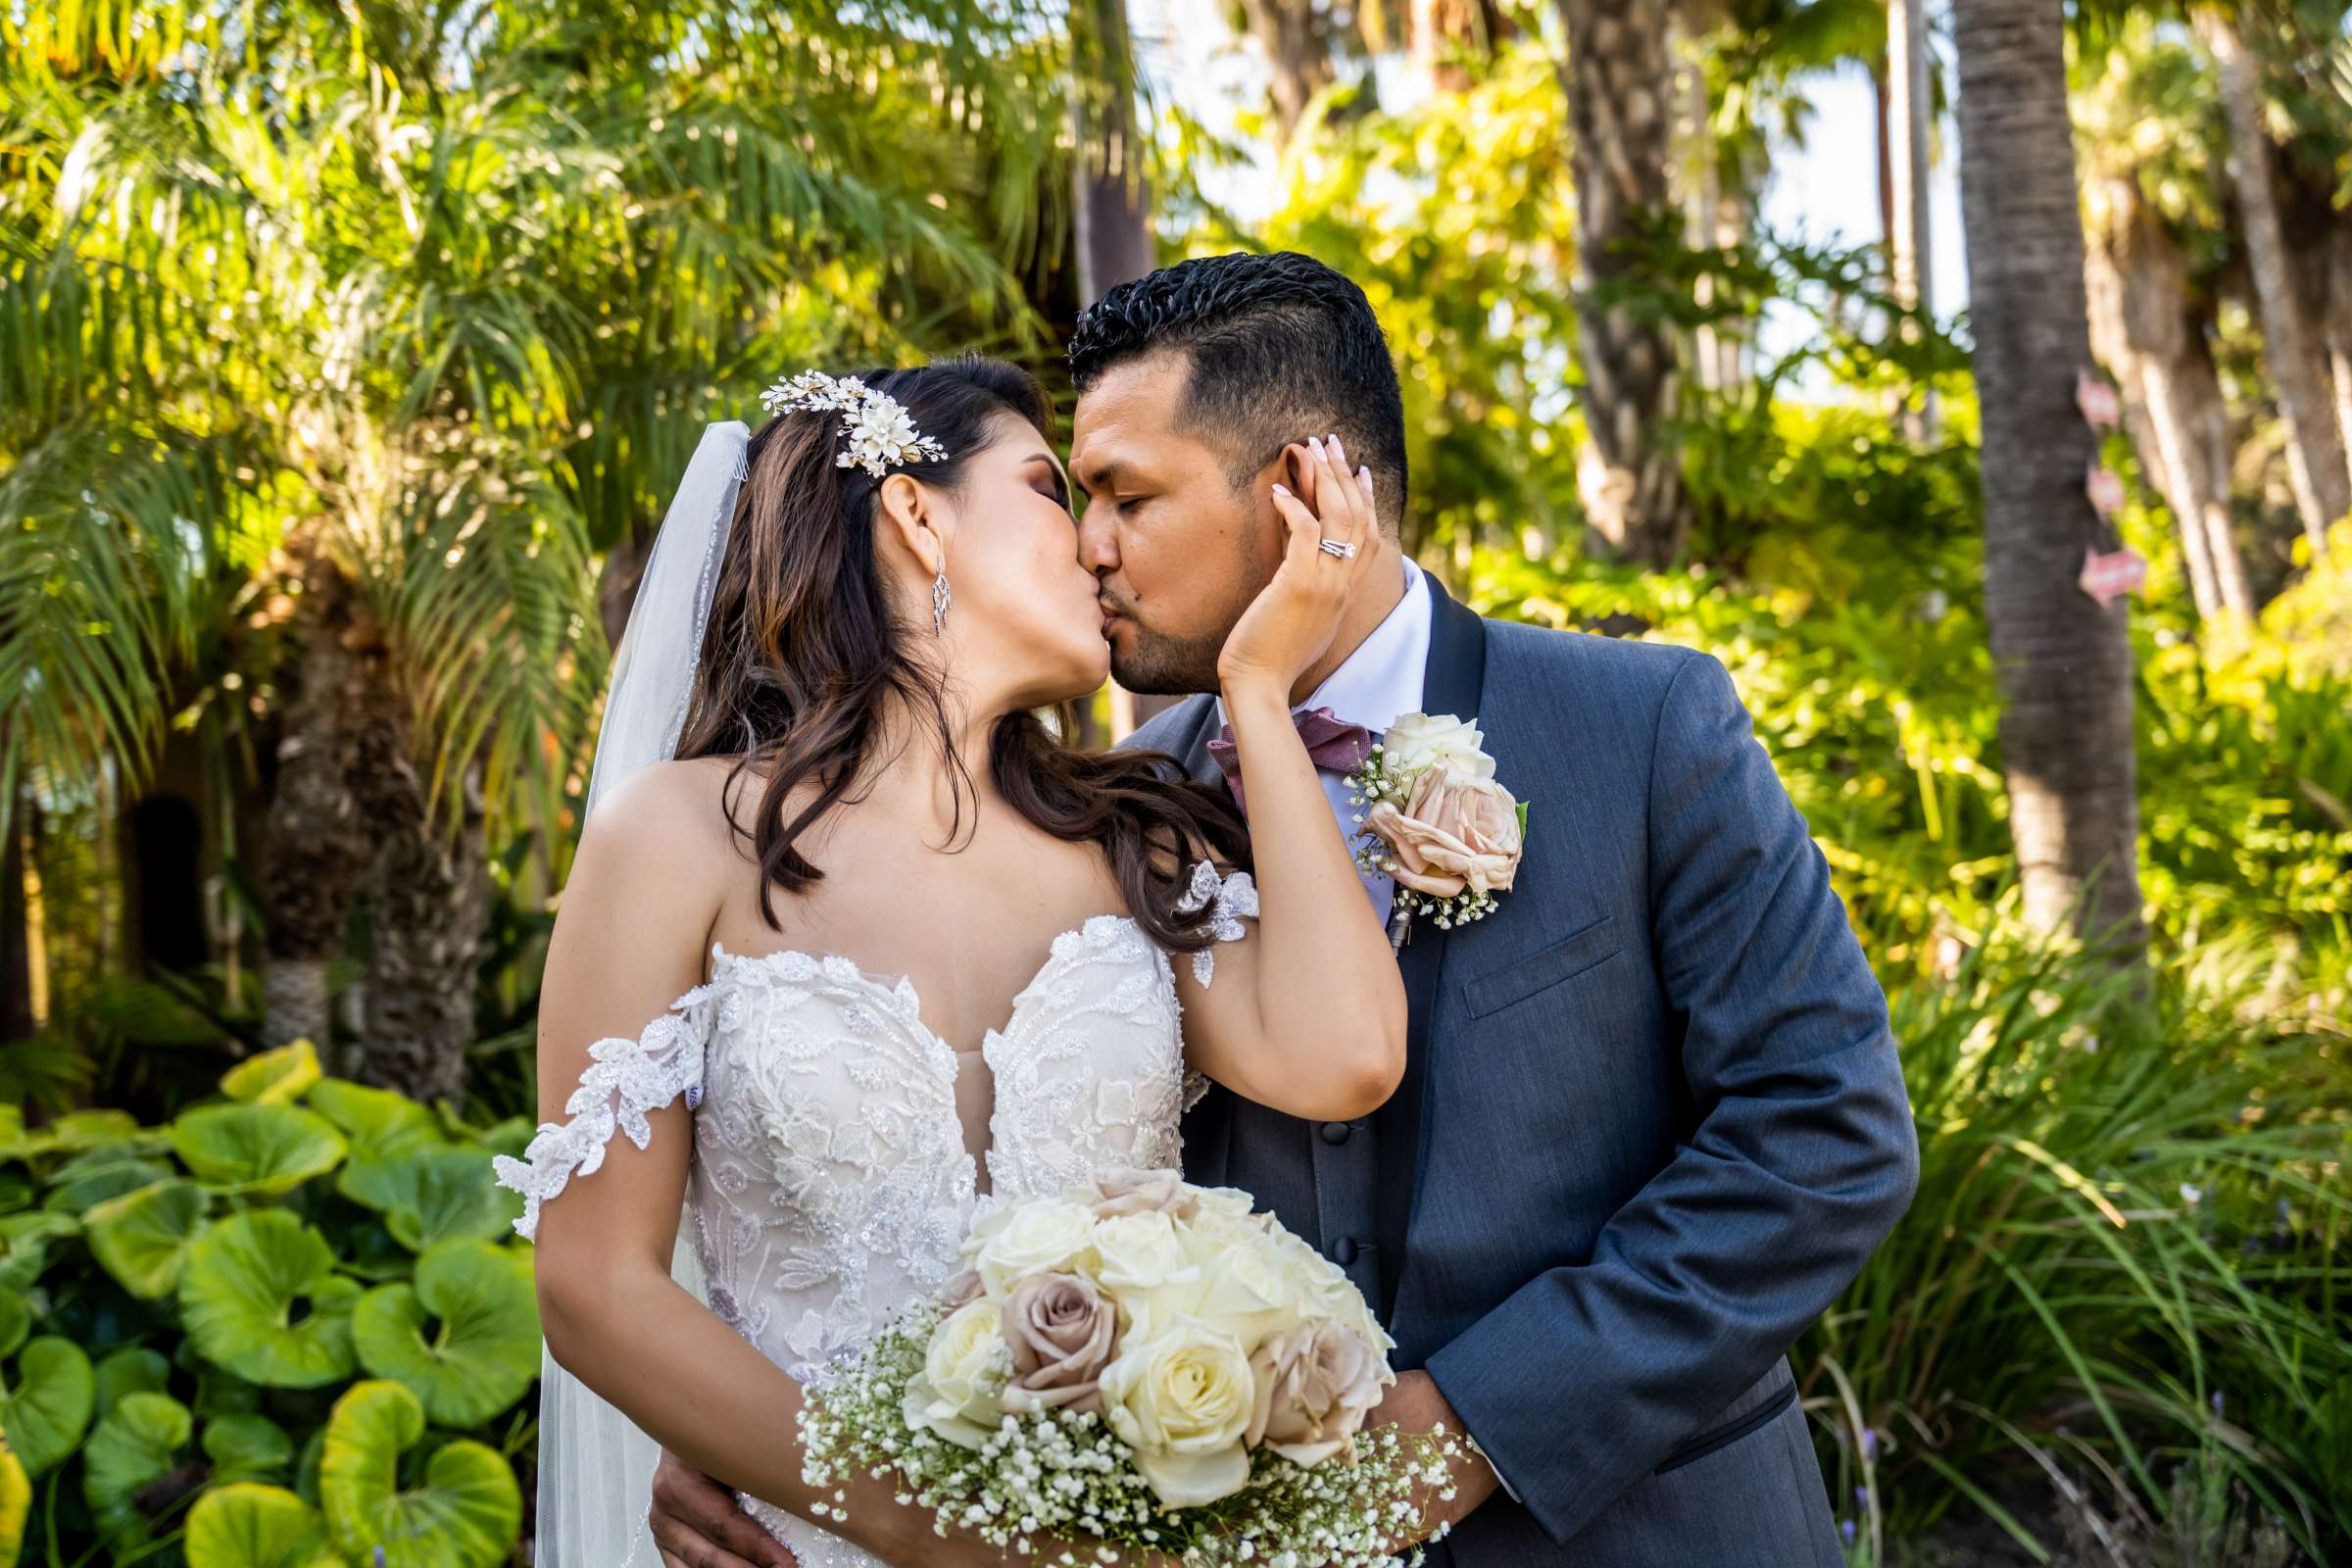 Paradise Point Wedding, Sinthia and Jose Wedding Photo #20 by True Photography